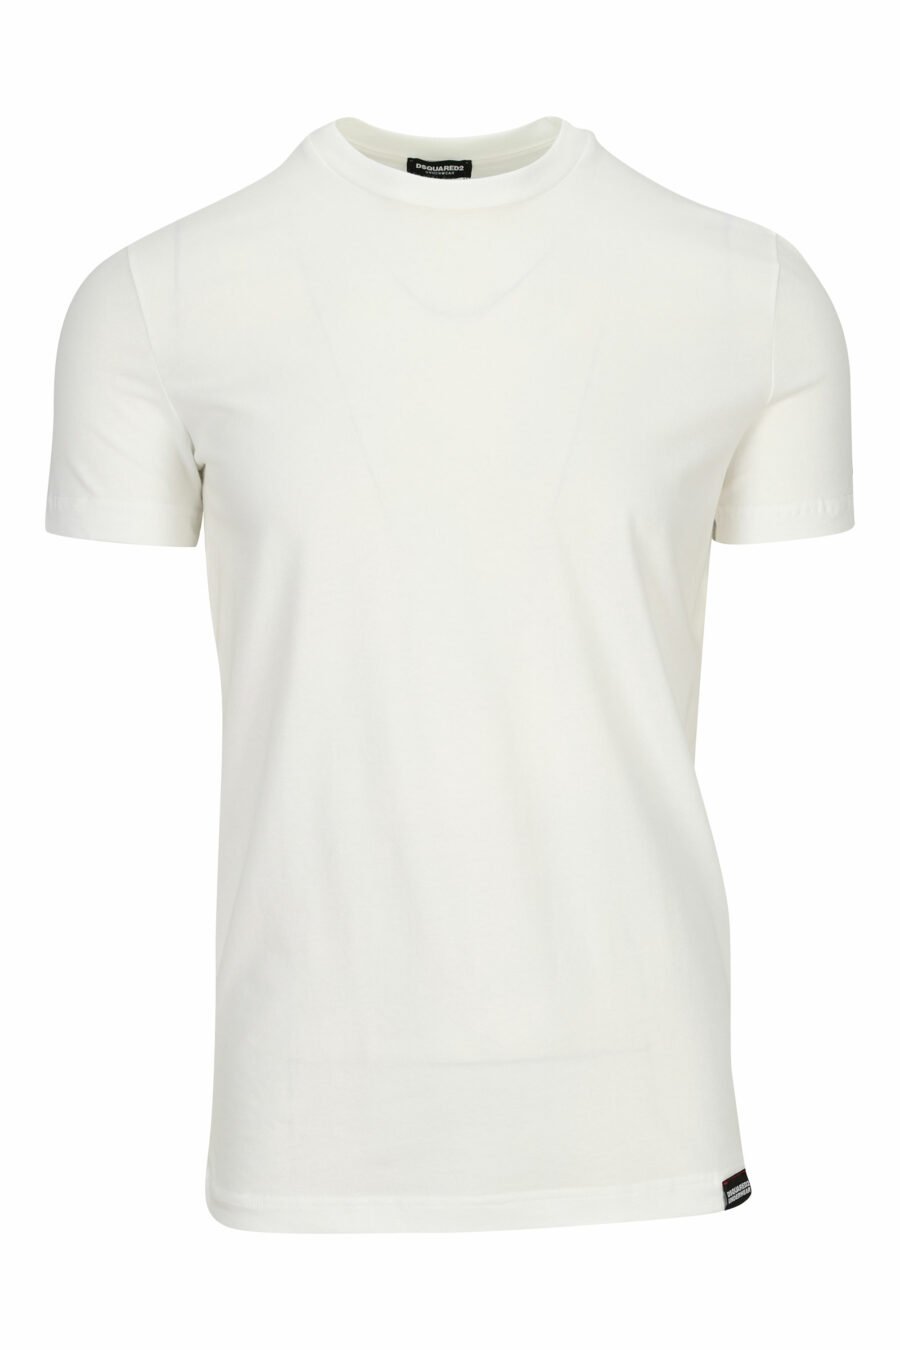 Camiseta blanca con minilogo "underwear" - 8032674811561